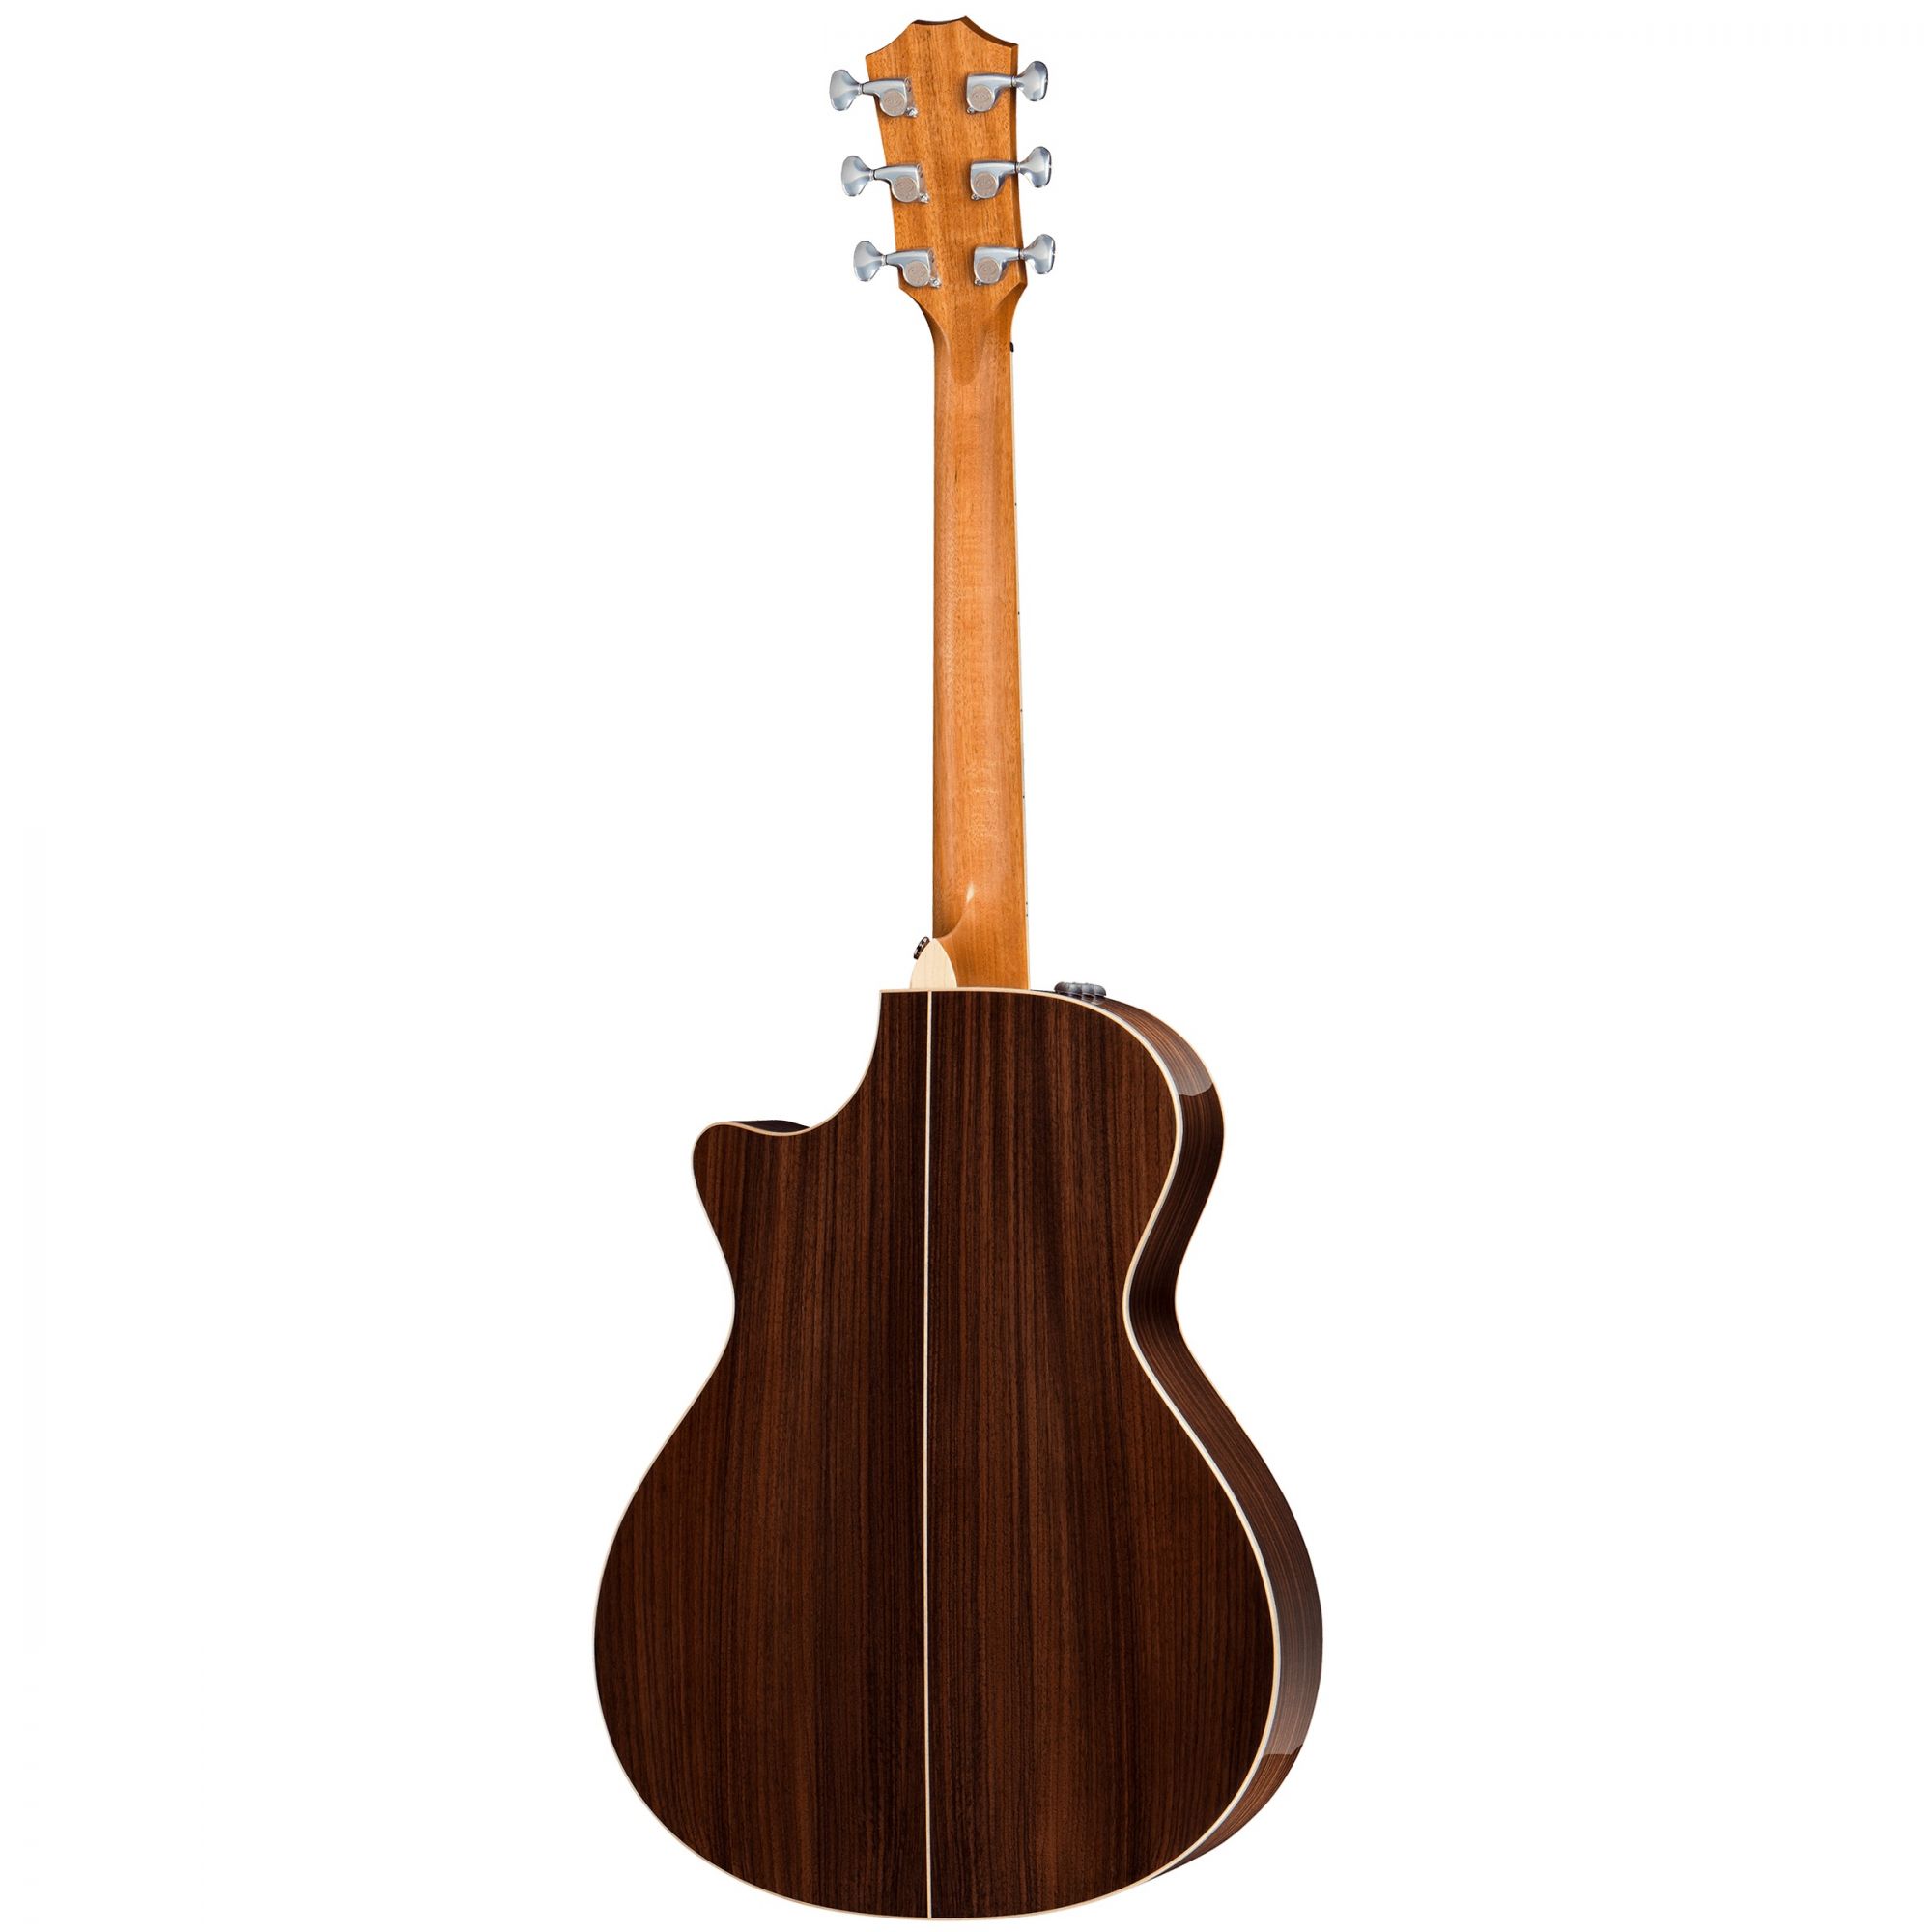 Taylor 812ce DLX Grand Concert Electro Acoustic Guitar